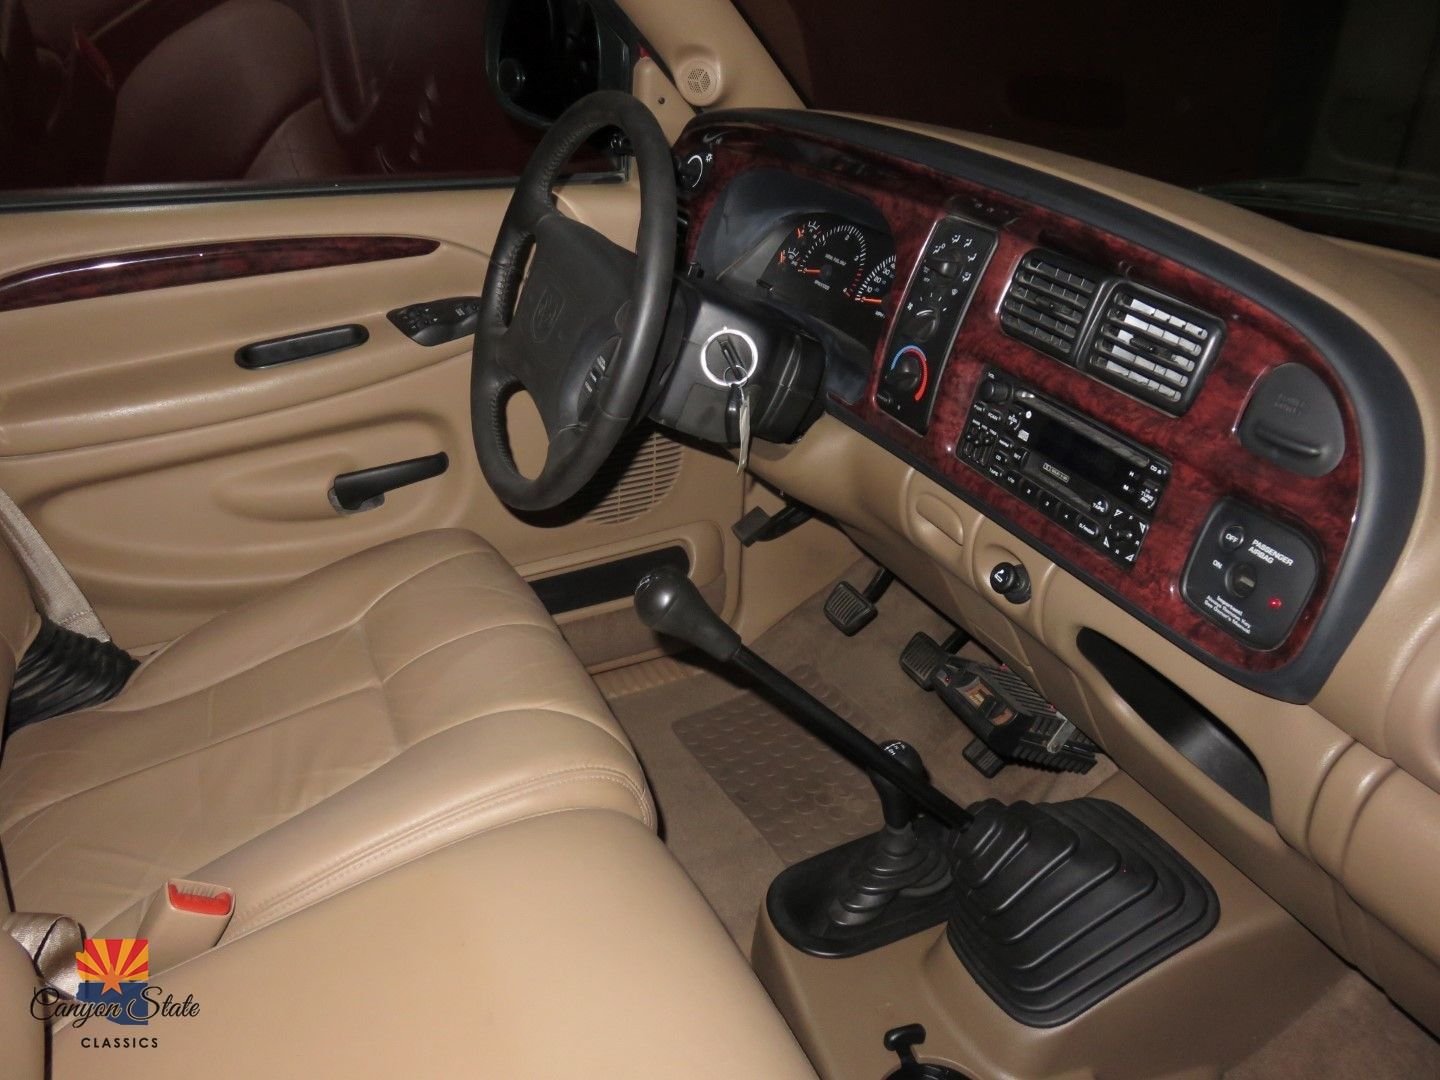 1998 Dodge Ram 2500 | Canyon State Classics